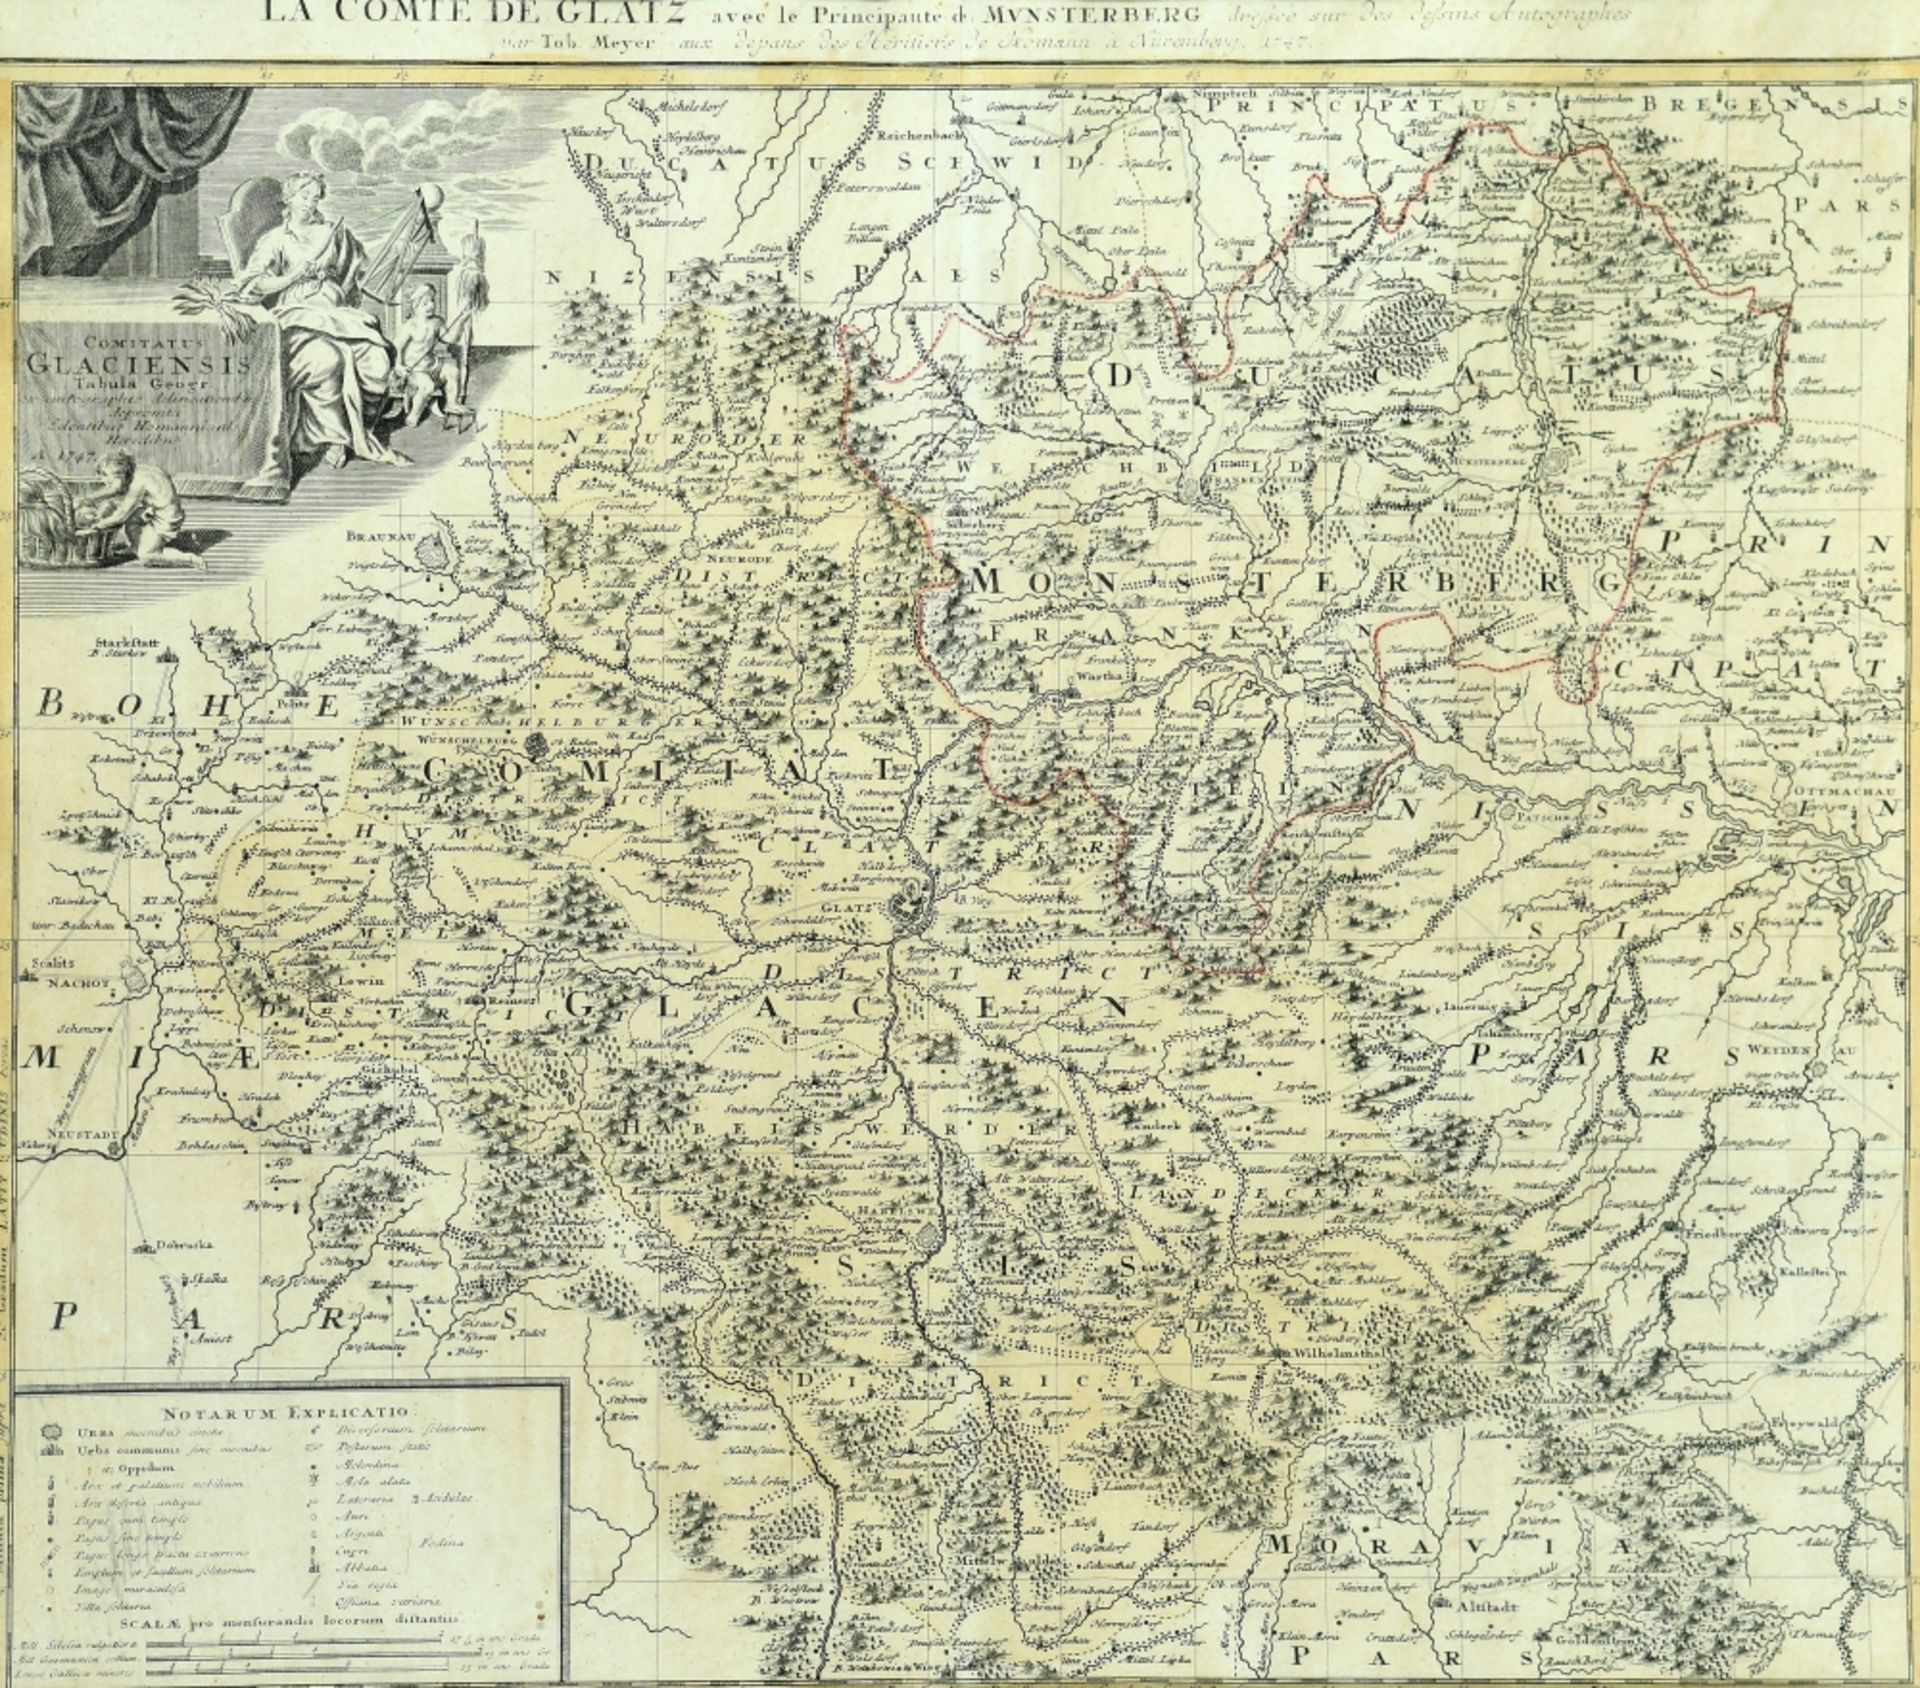 Landkarte "La comte de Glatz avec le Principaute de Munsterberg" - Image 2 of 2